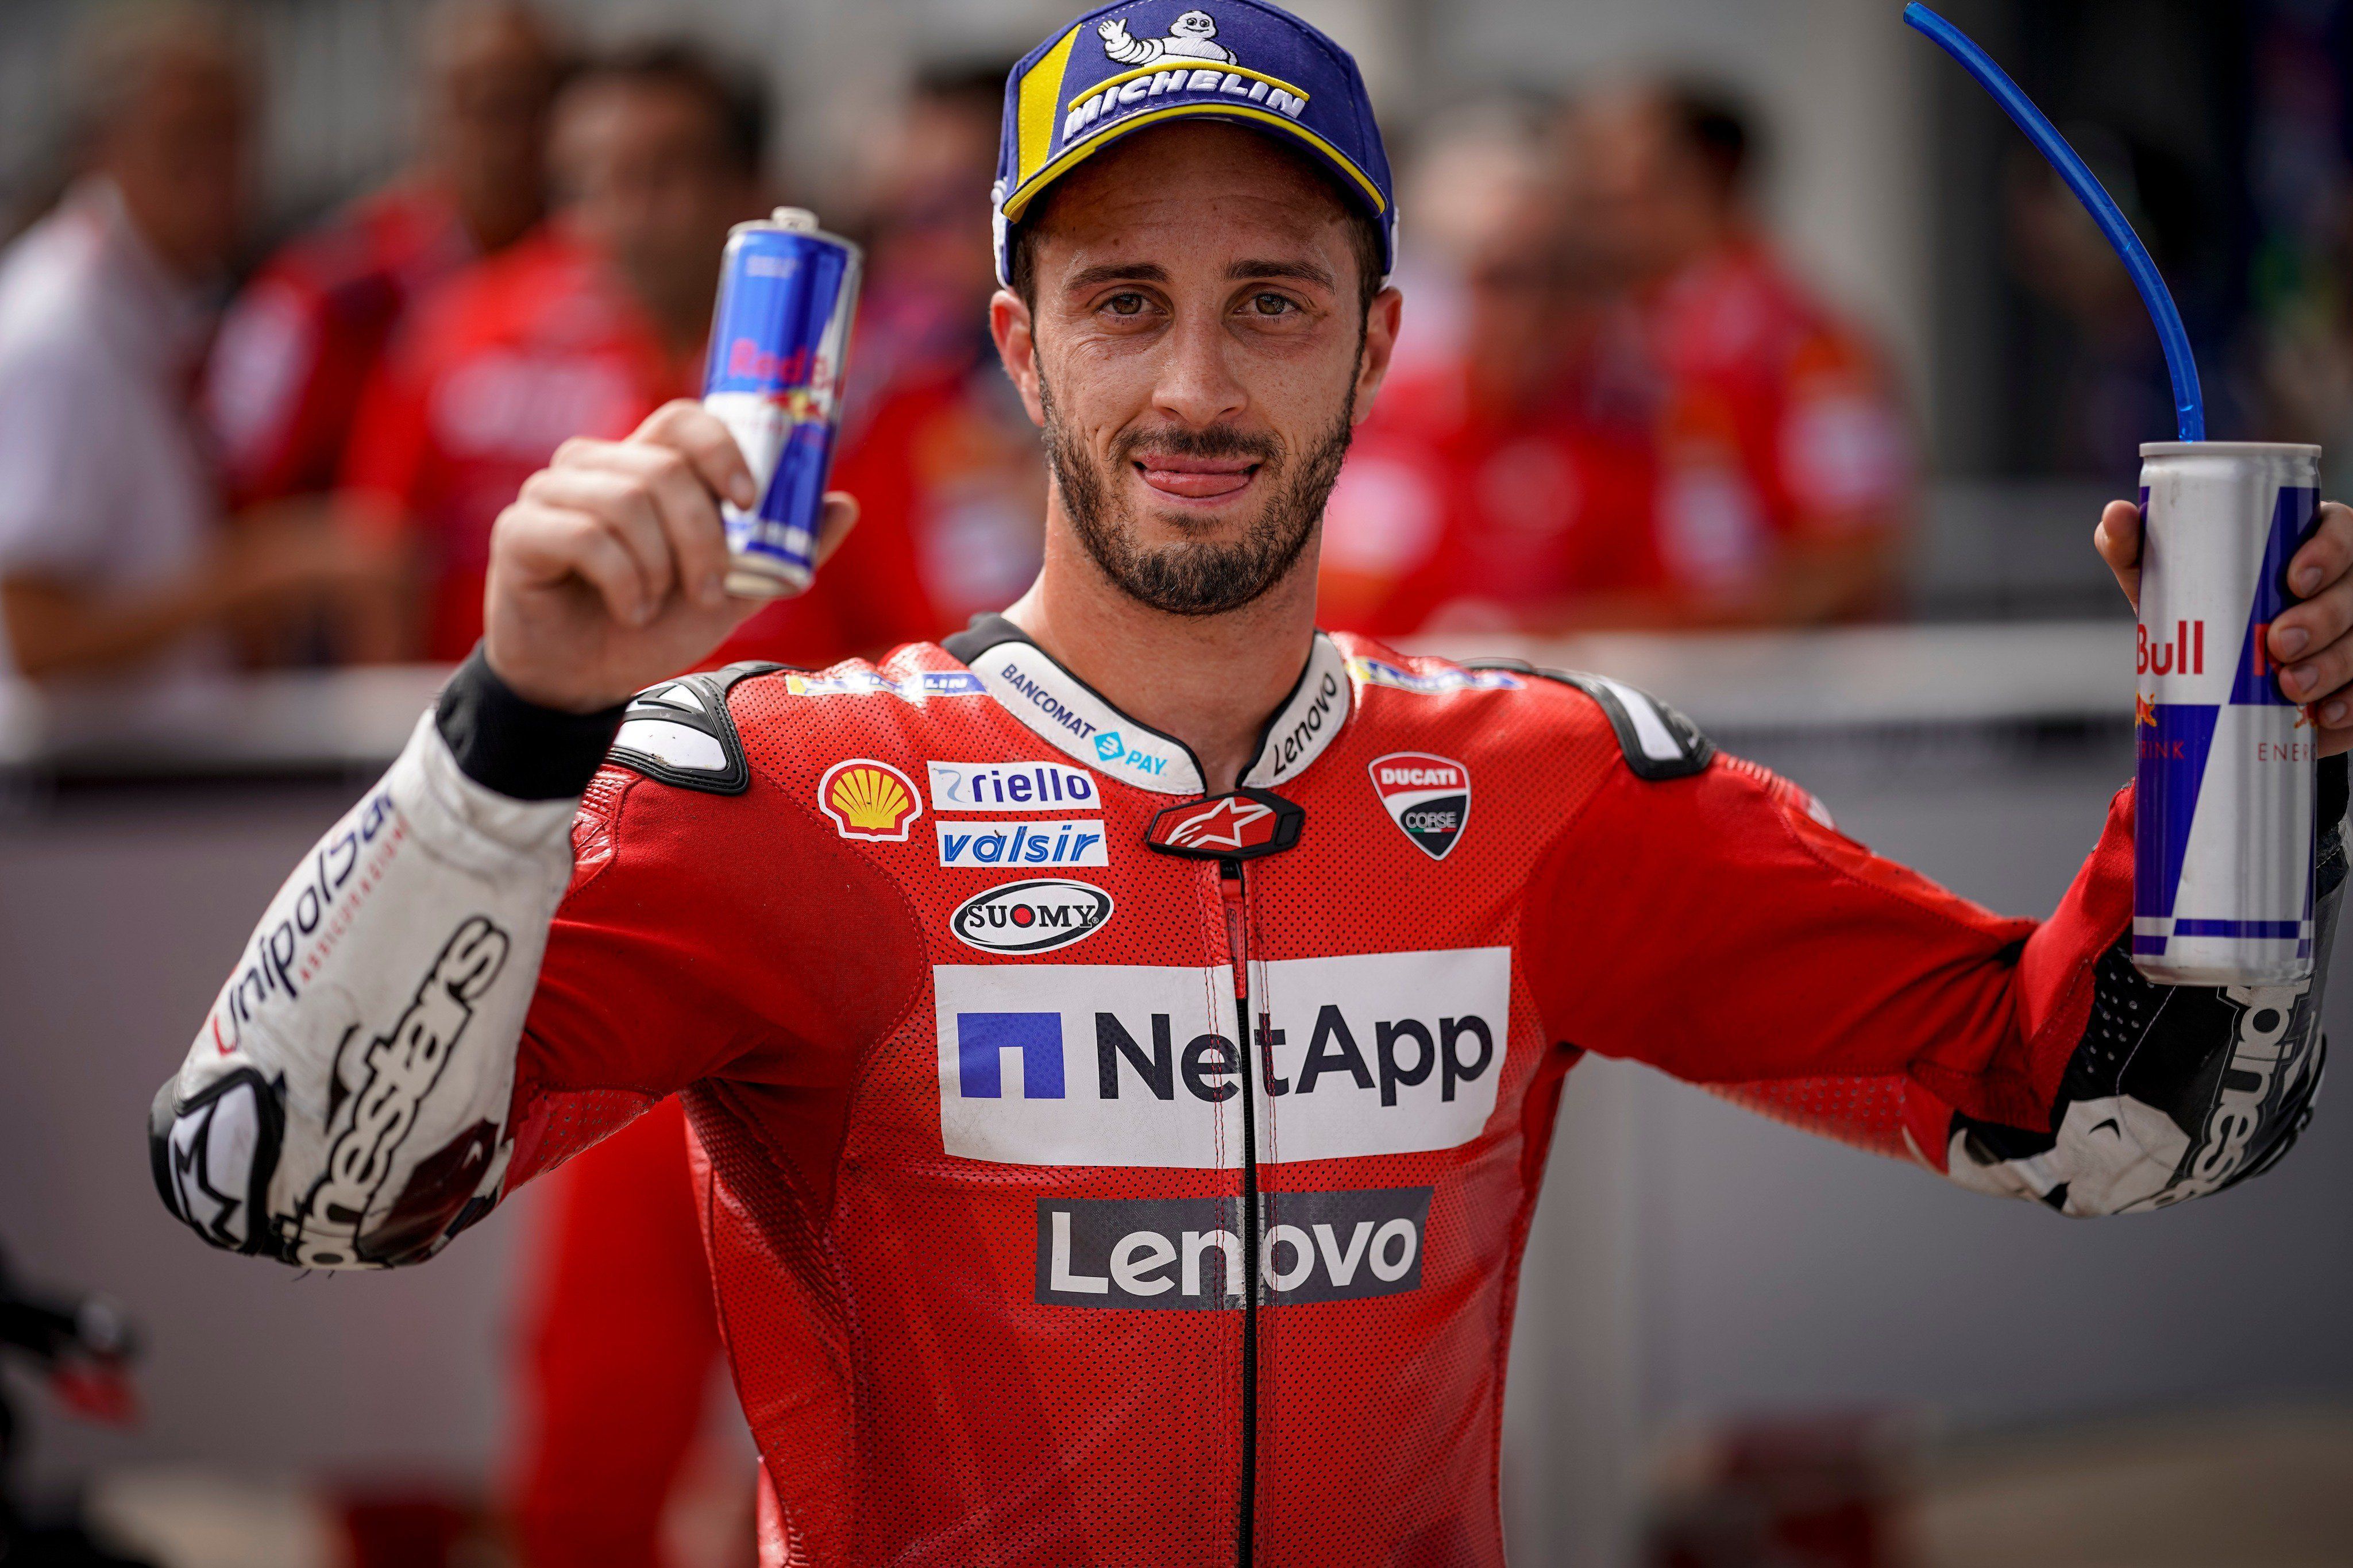 MotoGP: Dovizioso beats Marquez to win Austrian GP after an epic duel